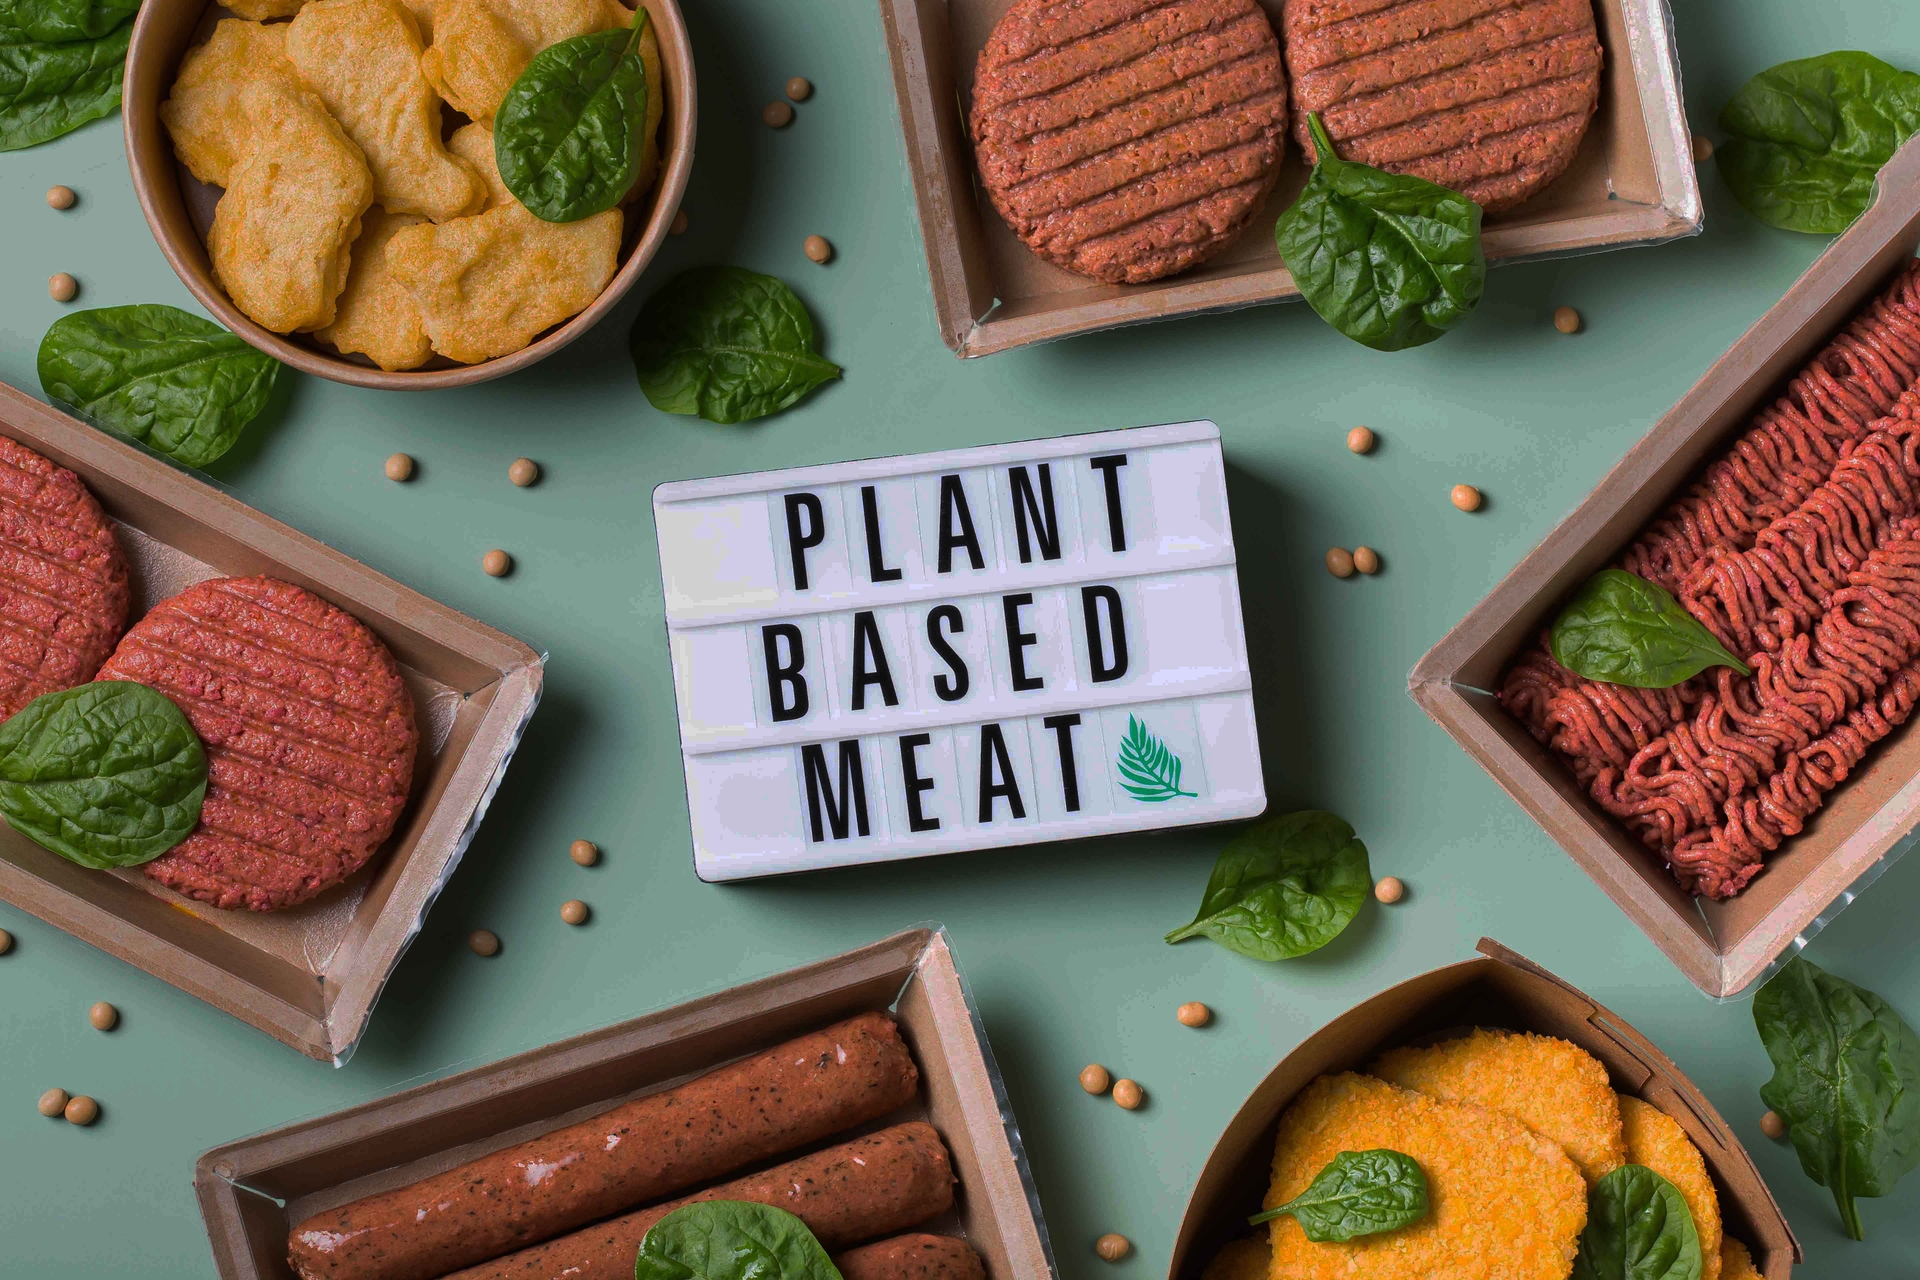 Plant based meat alternatives